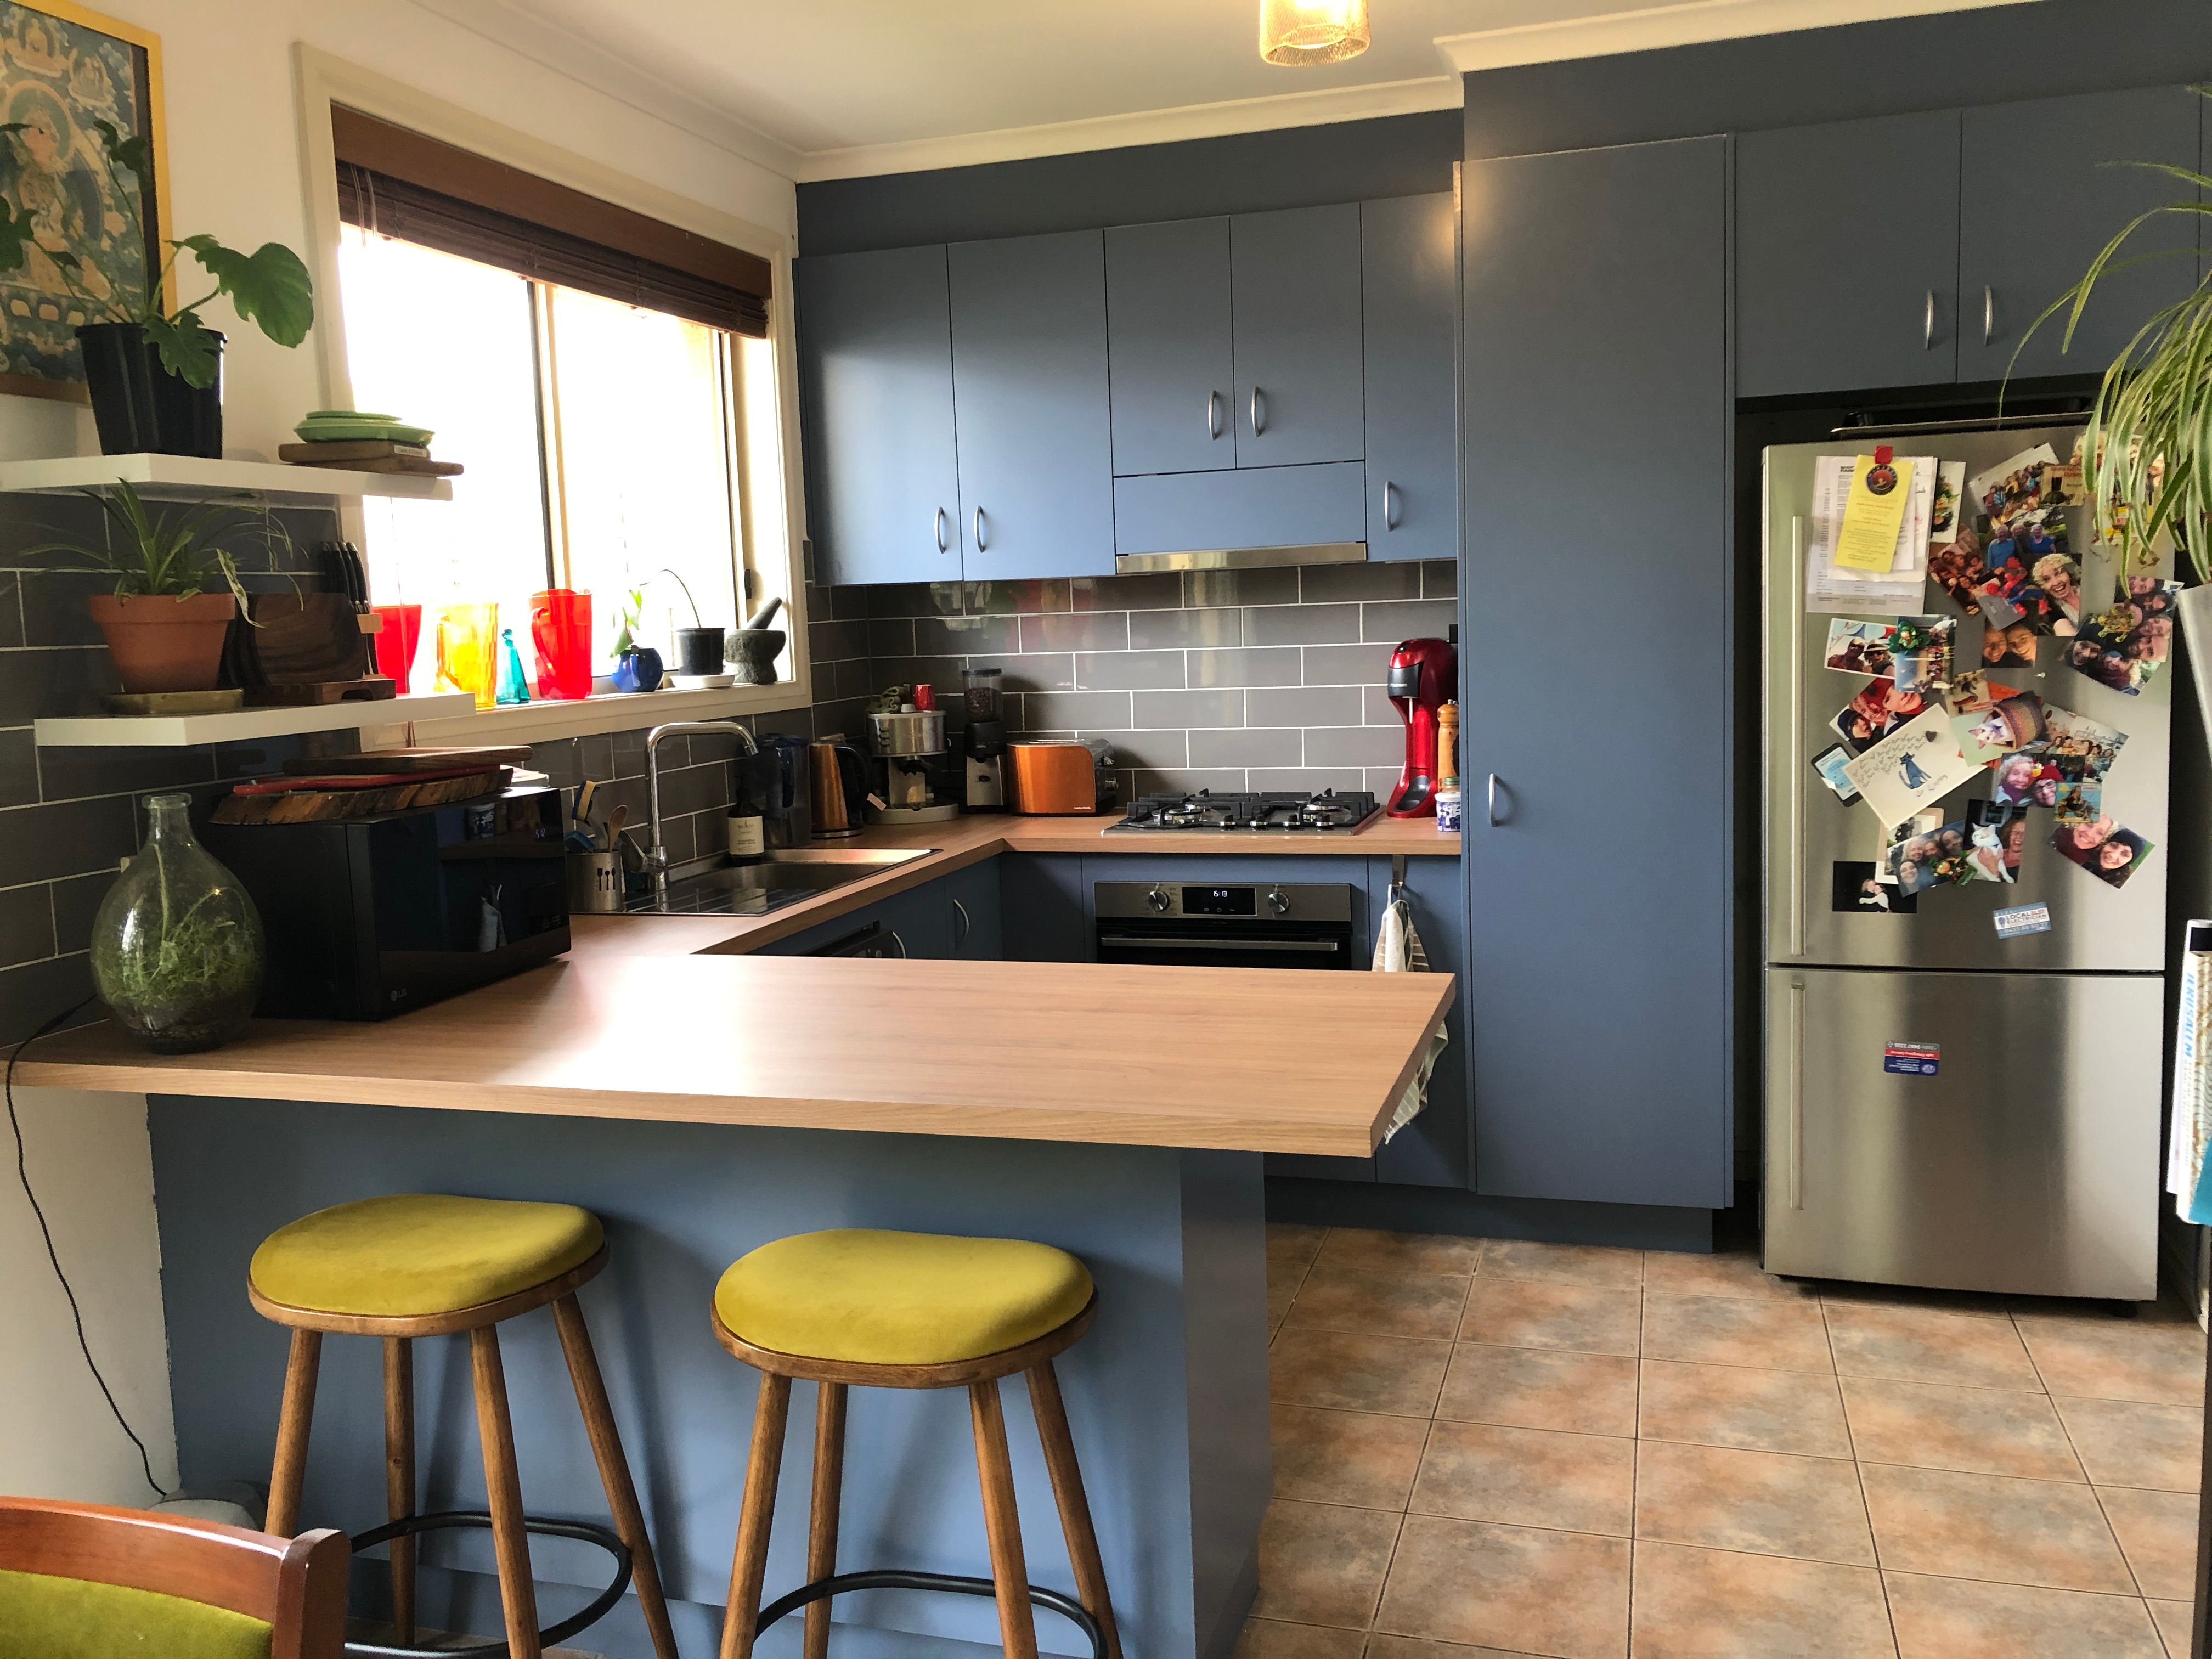 Small kitchen upgrade | Bunnings Workshop community